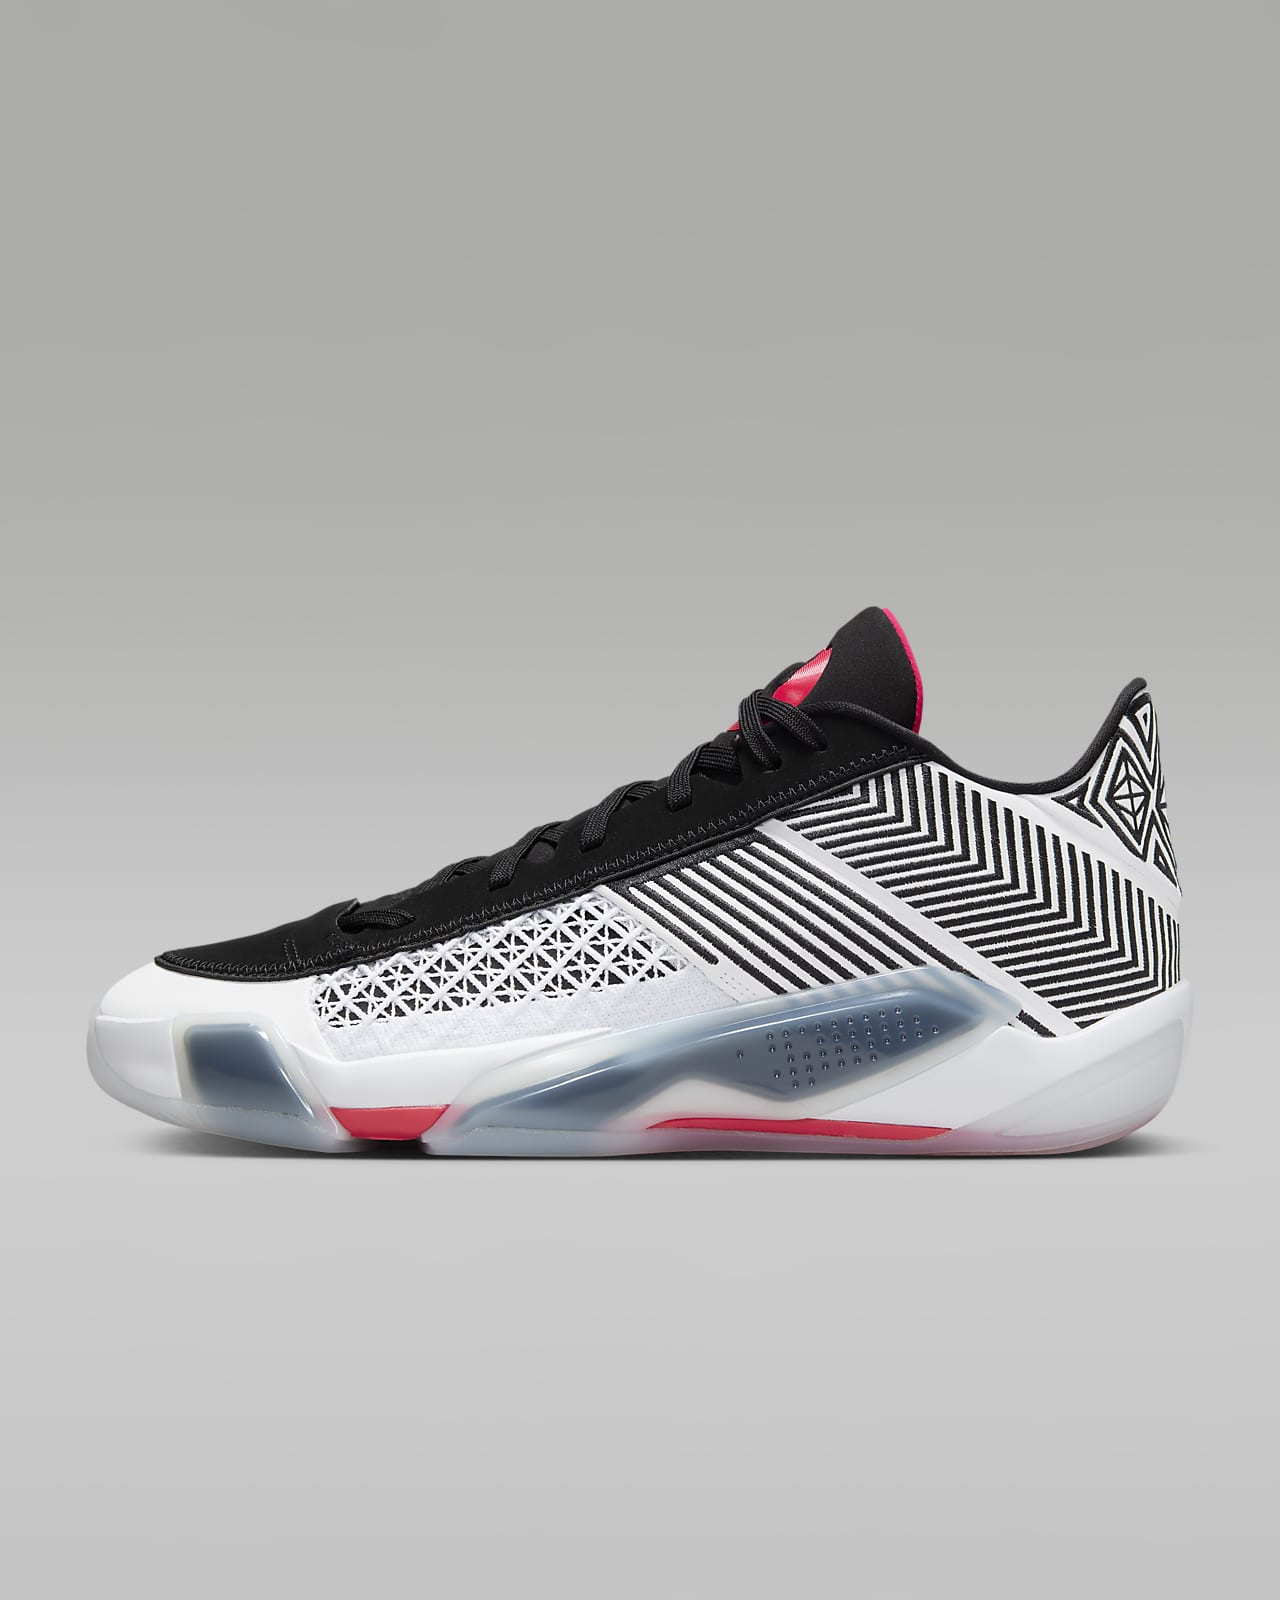 Air Jordan XXXVIII Low 'Fundamental' Basketball Shoes